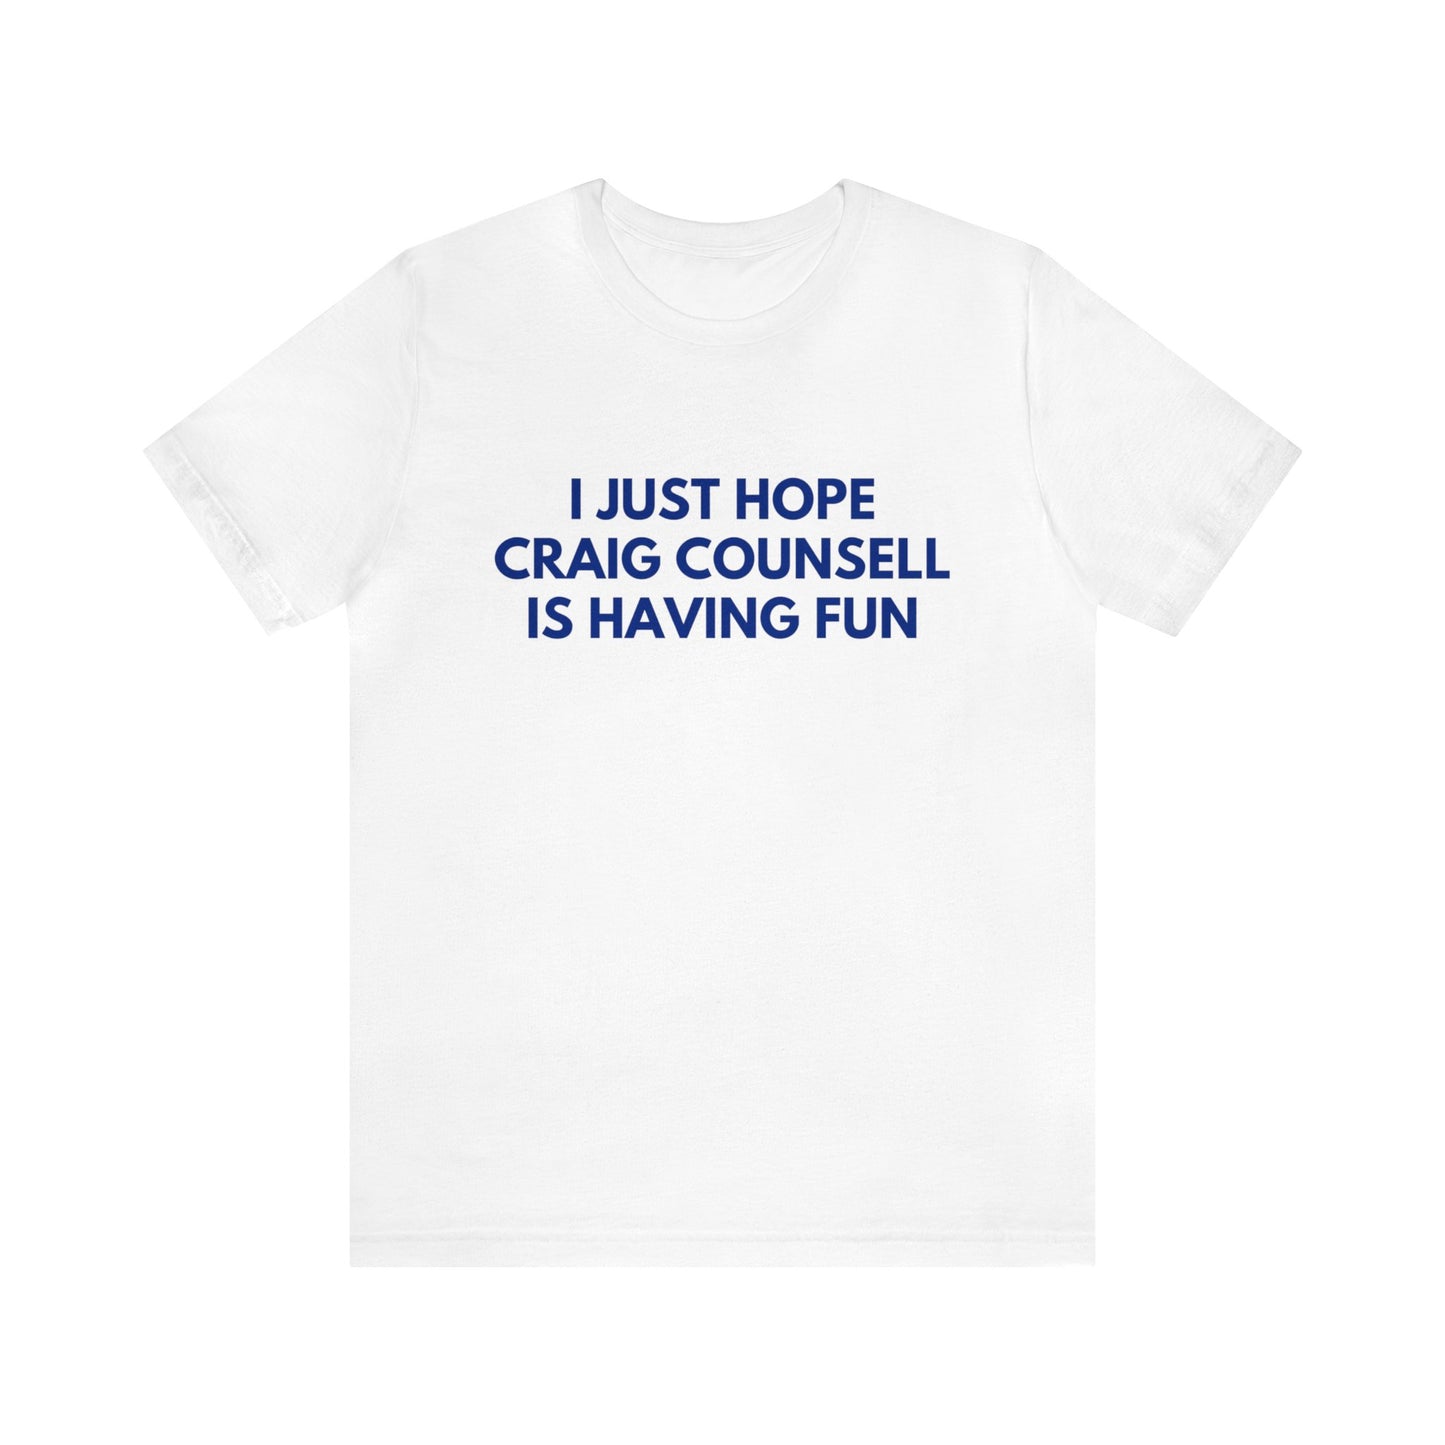 Craig Counsell Having Fun - Unisex T-shirt